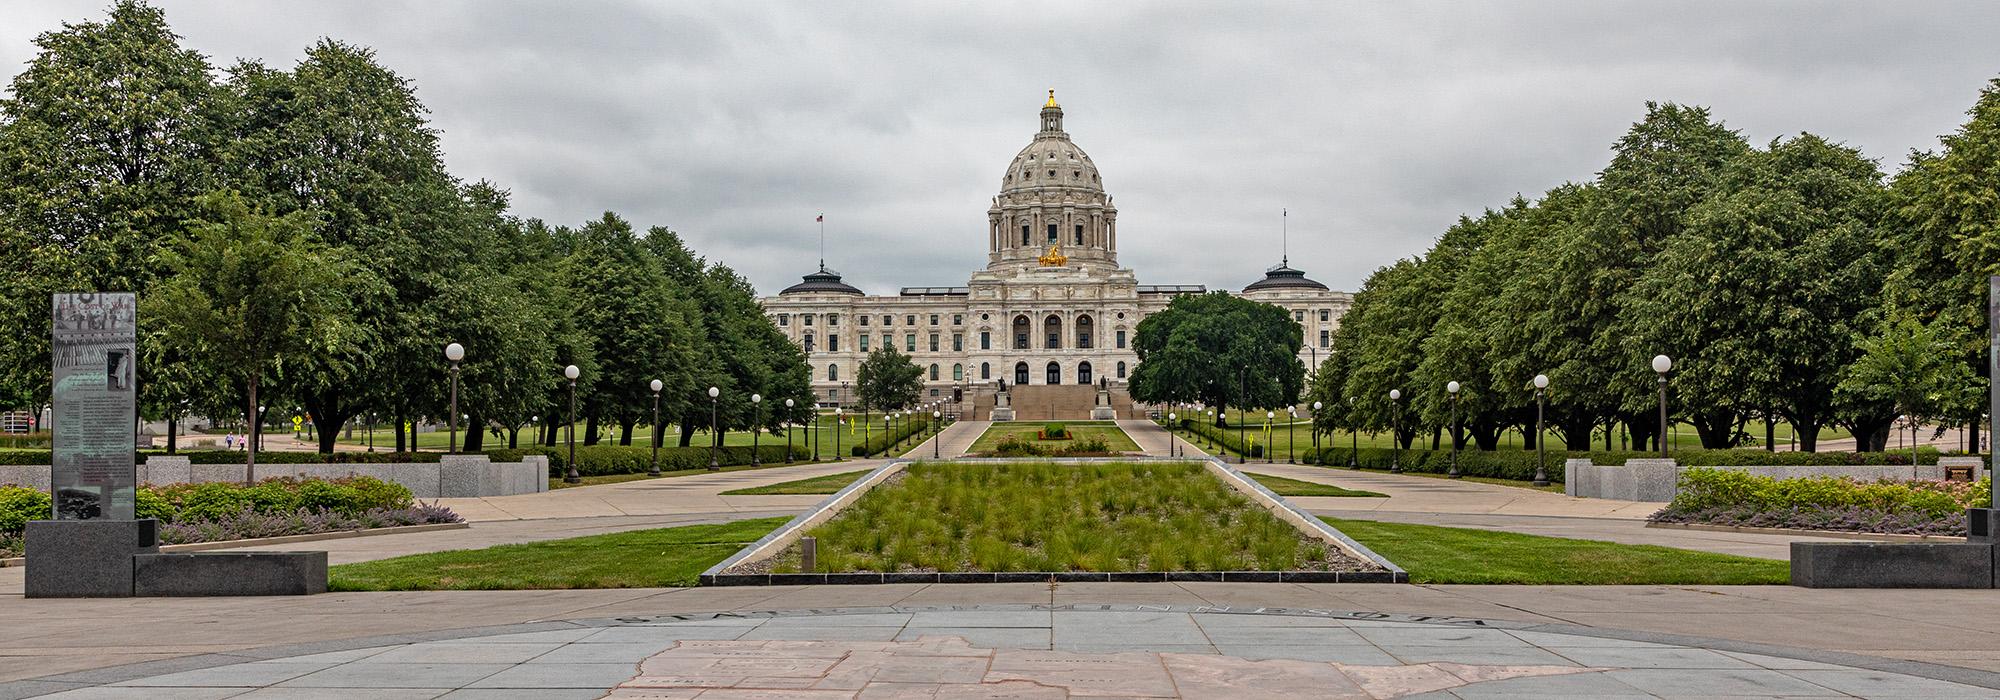 Minnesota State Capitol, St. Paul, MN